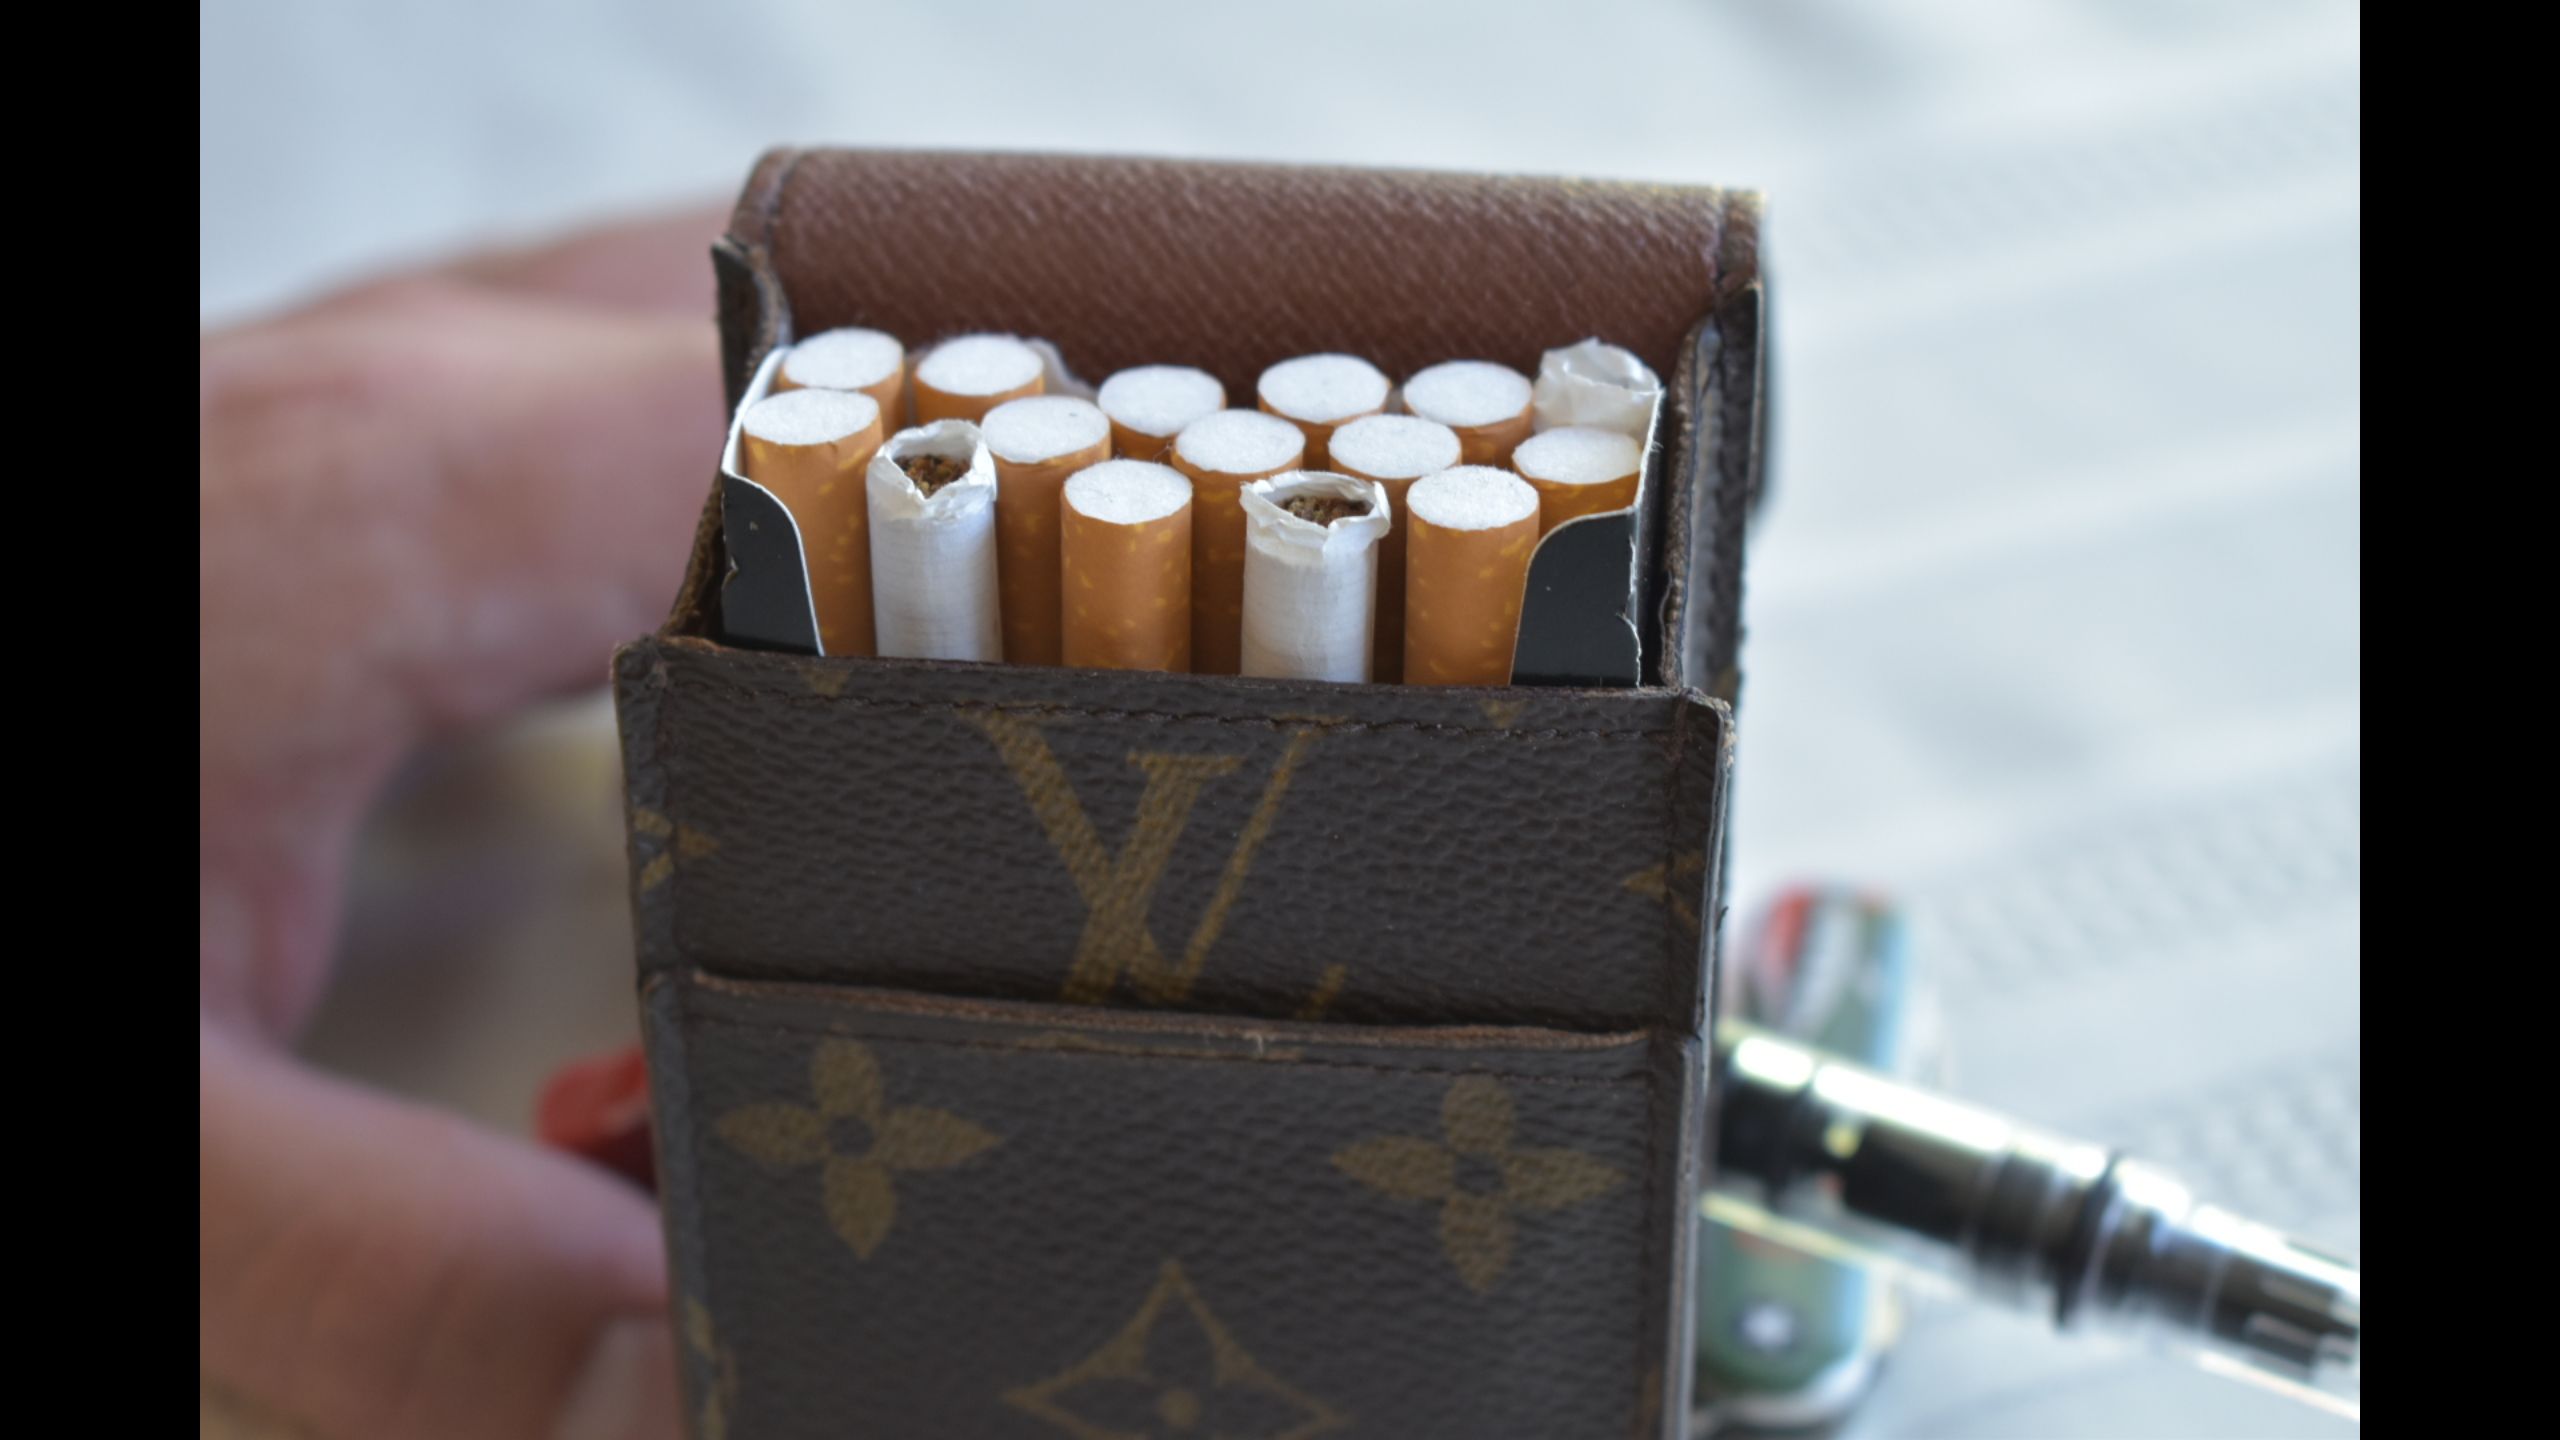 Louis Vuitton Monogram Cigarette Case Etui or Mobile Phone Case 40LVa1117